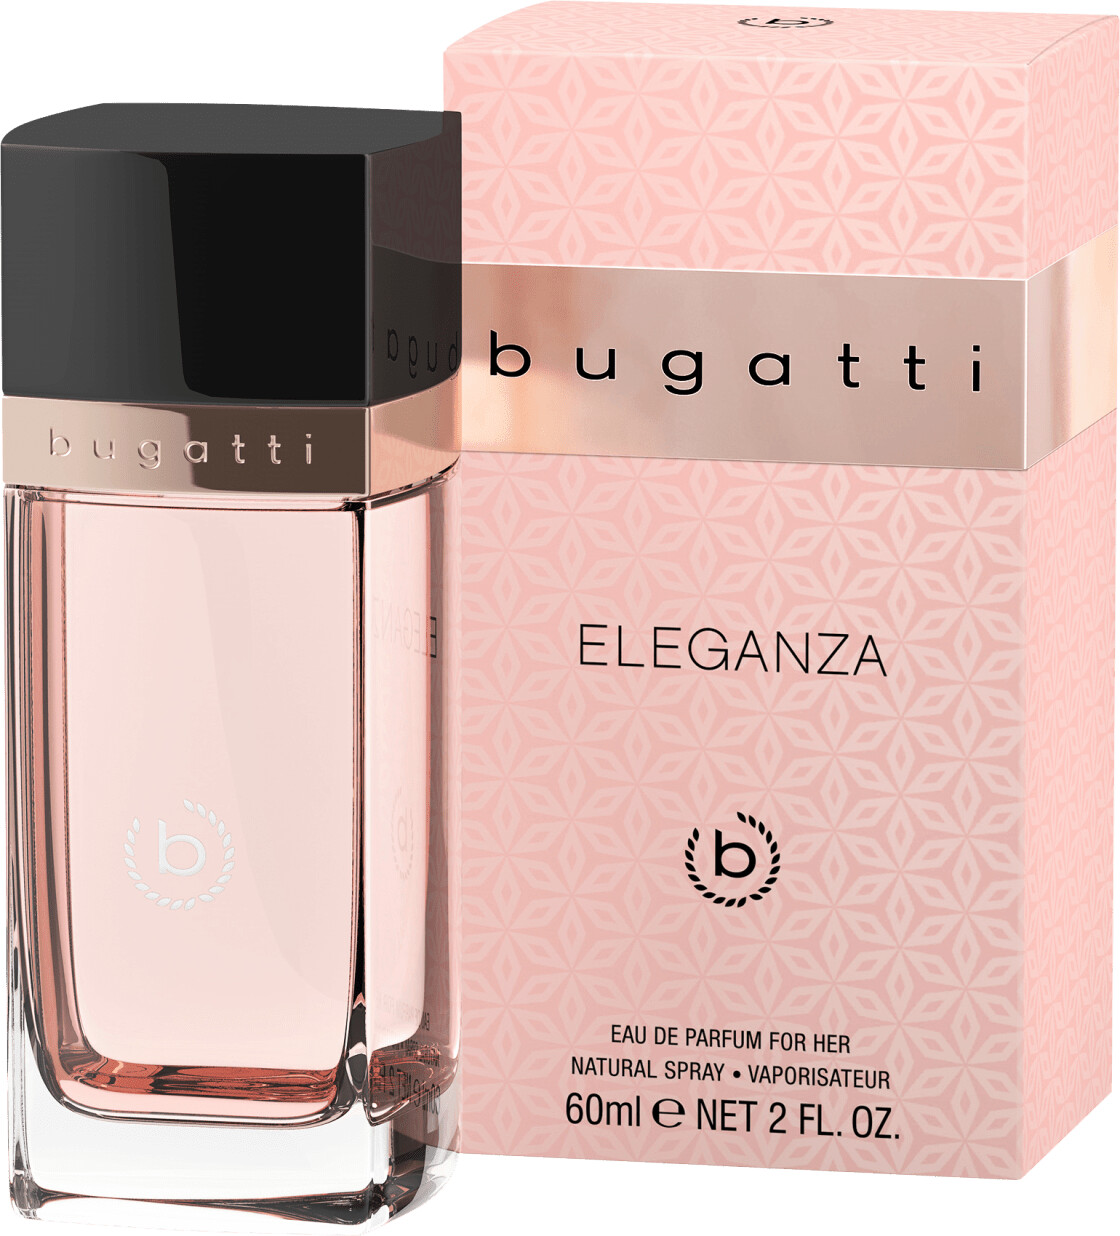 Bugatti Eleganza Eau de Parfum Preisvergleich ab € | (60ml) bei 17,45